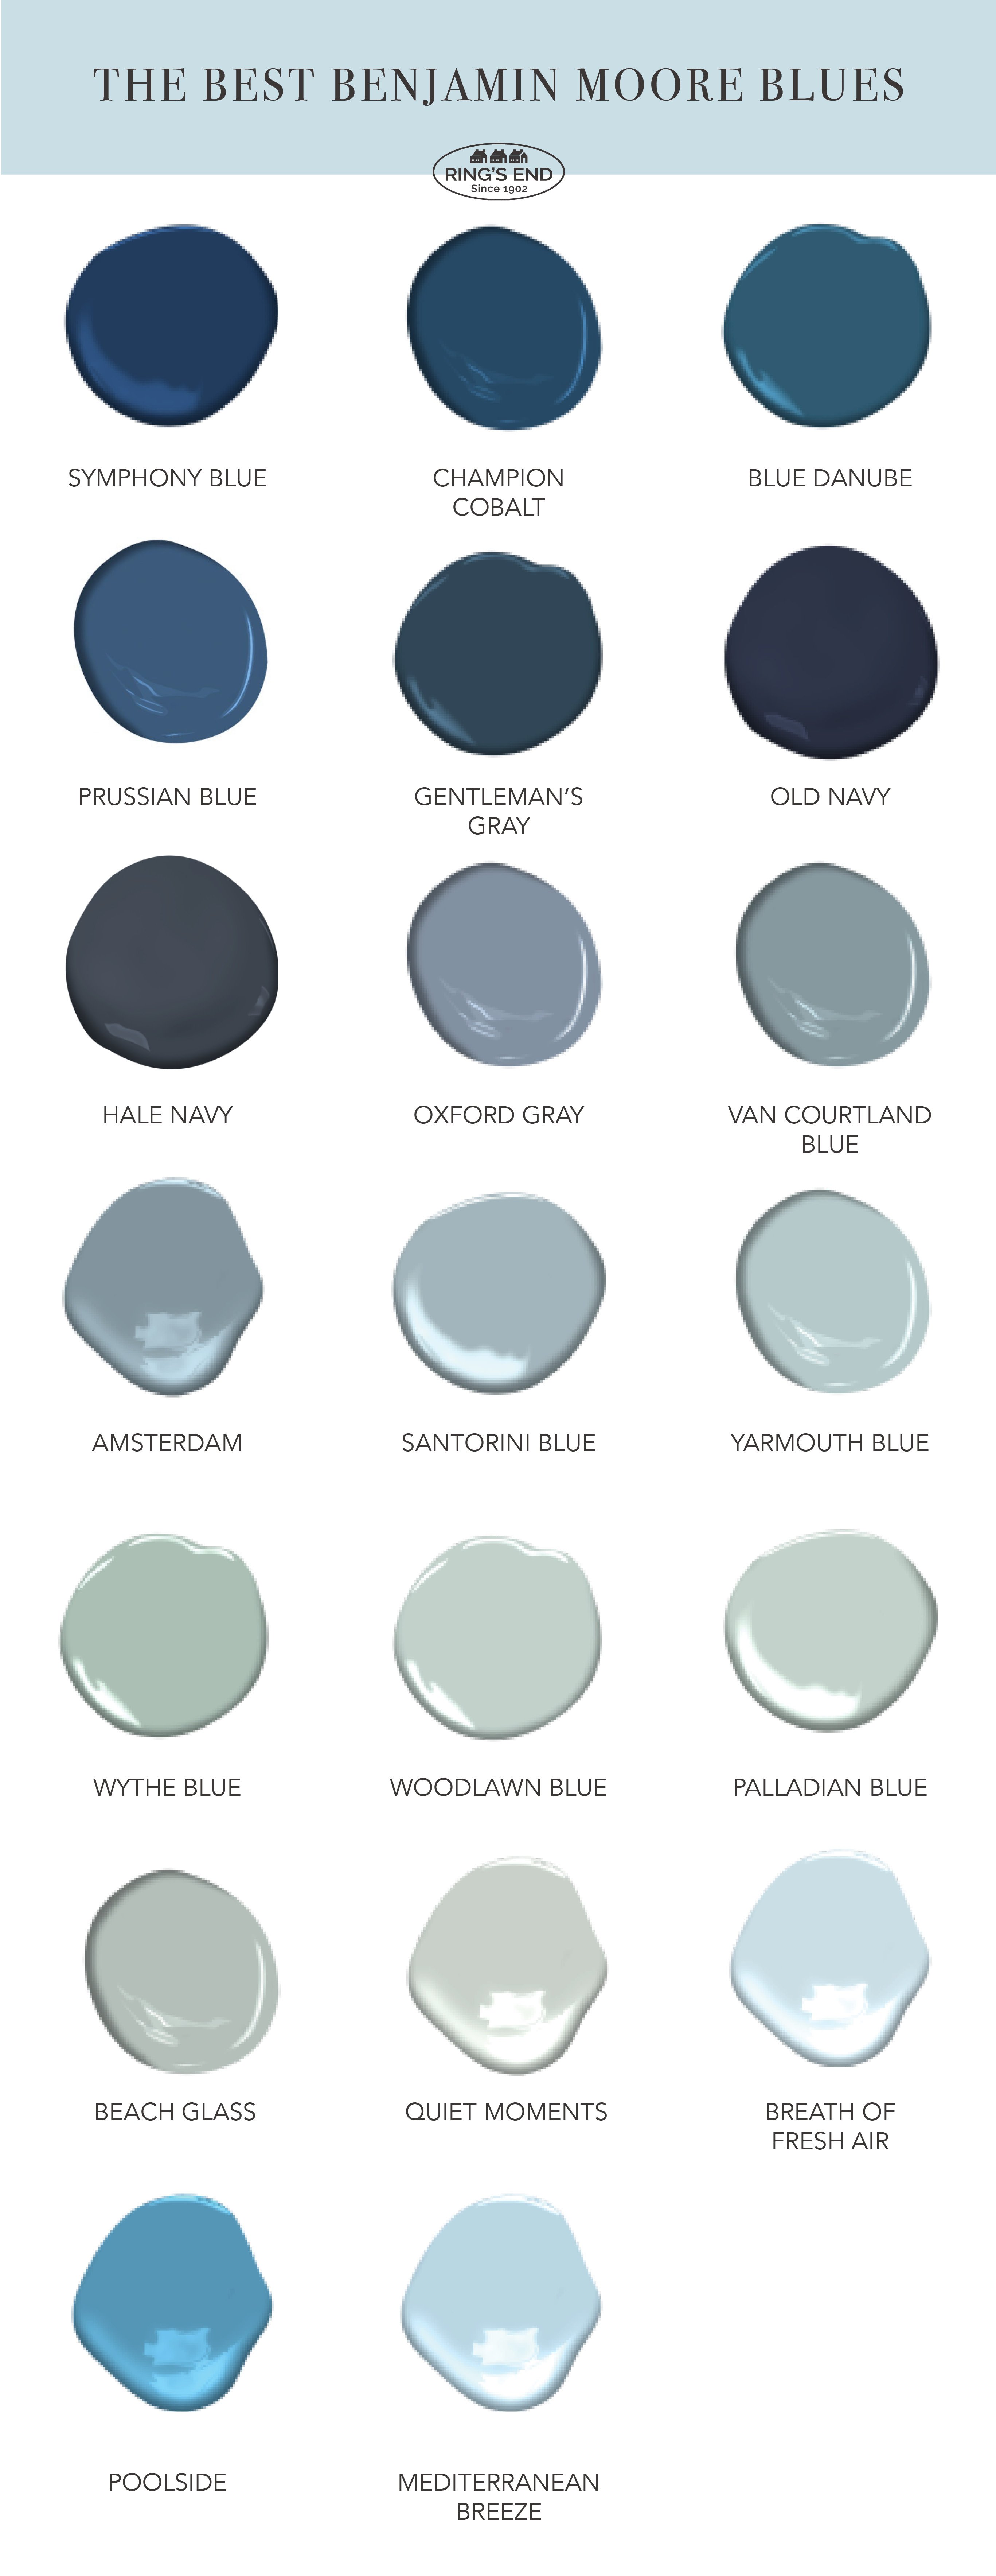 infographic showing best benjamin moore blue paint colors